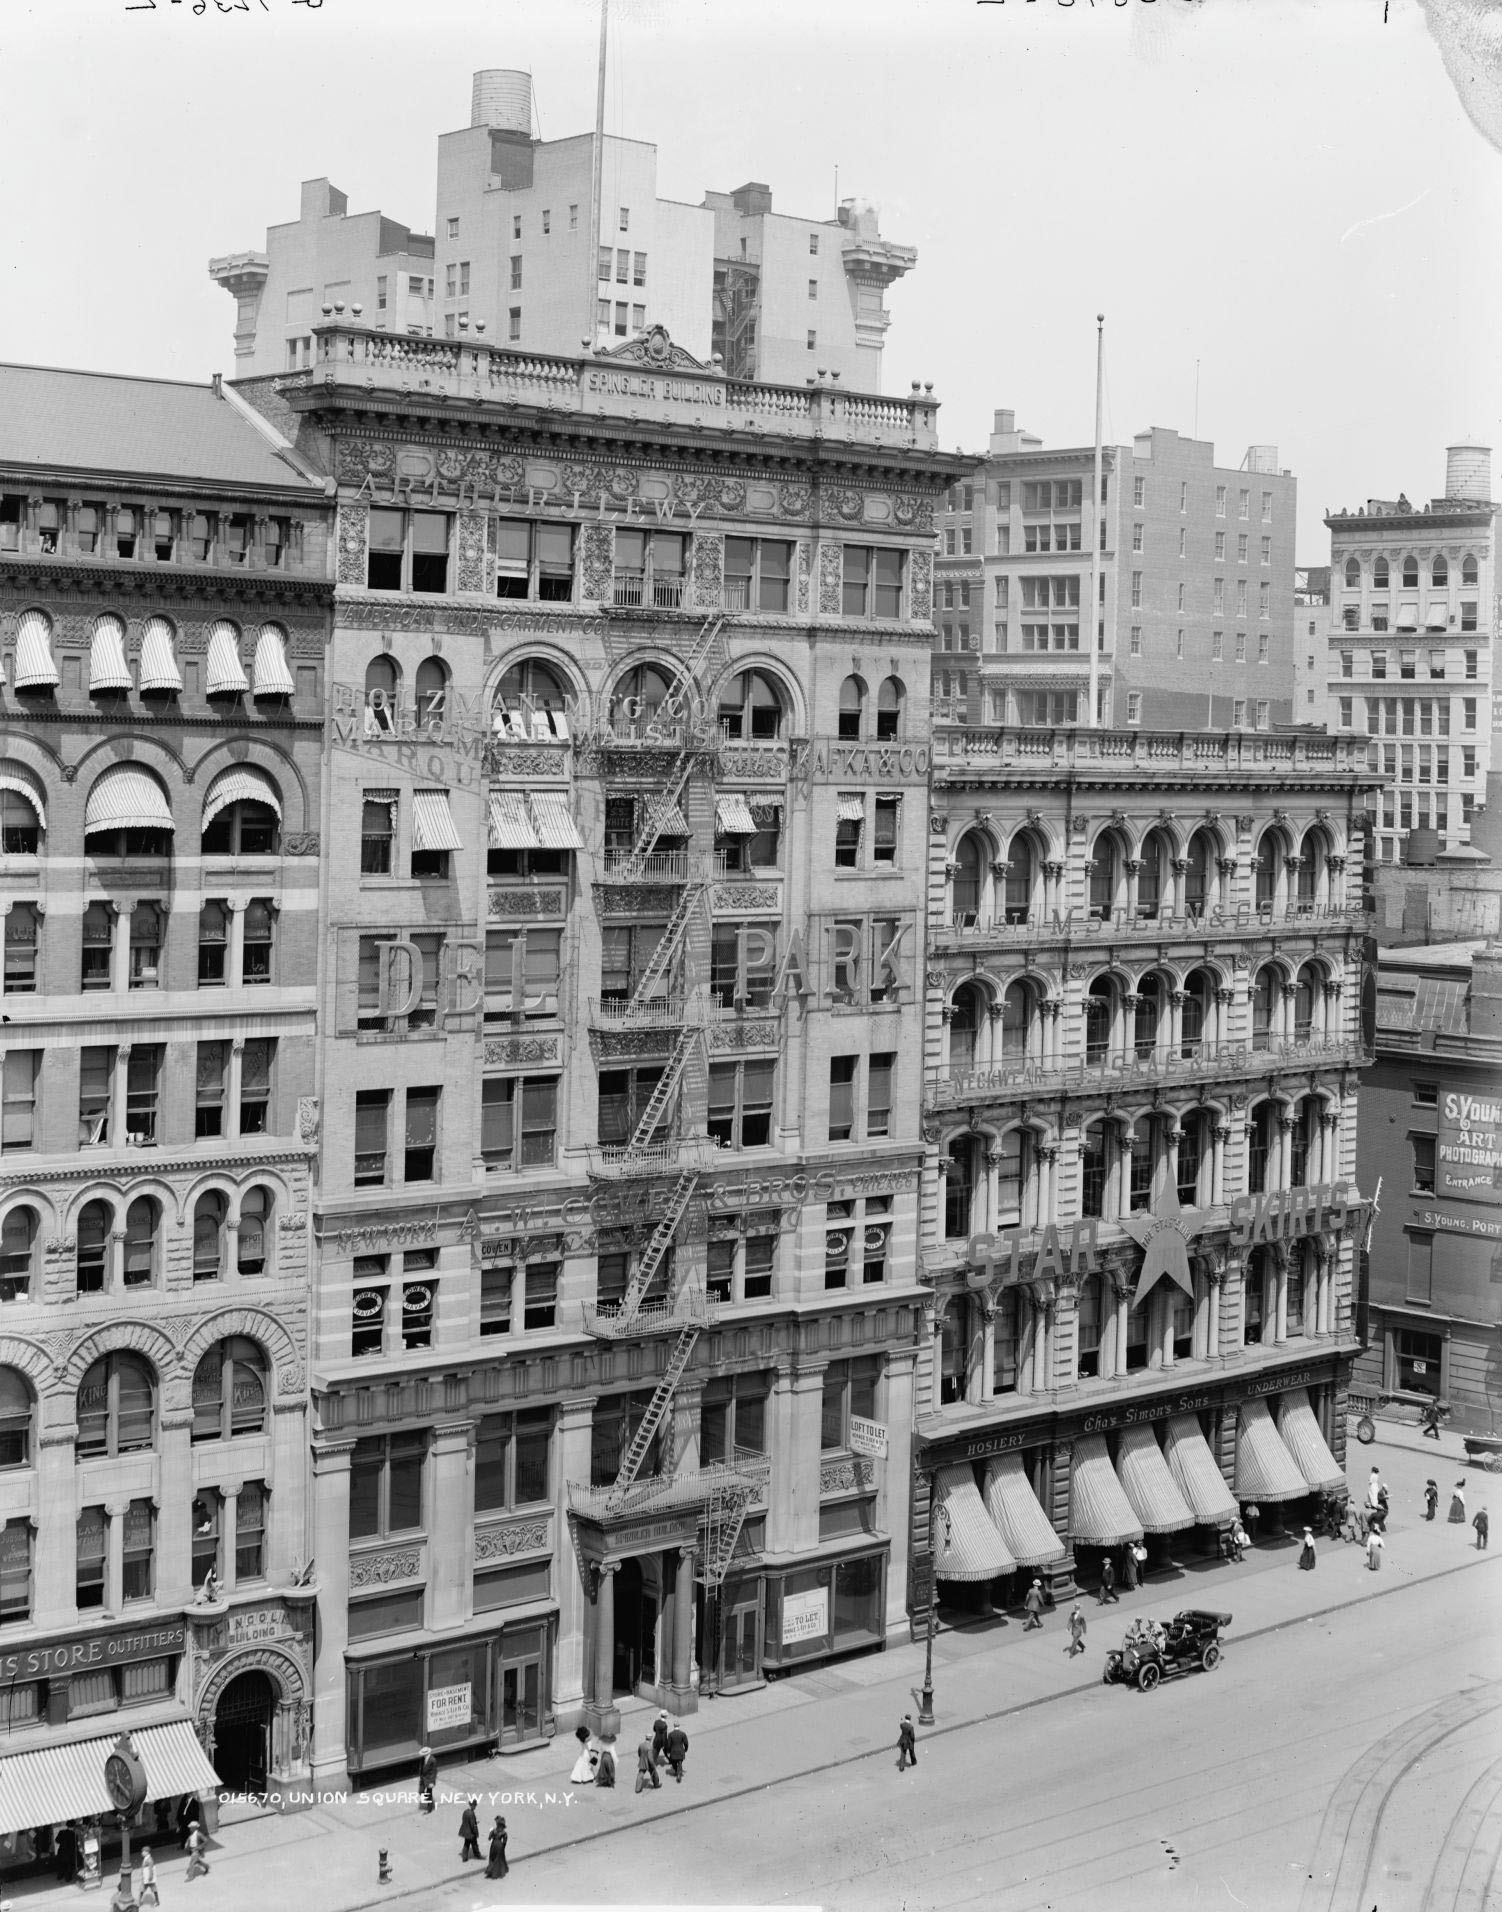 Union Square, New York City, 1909